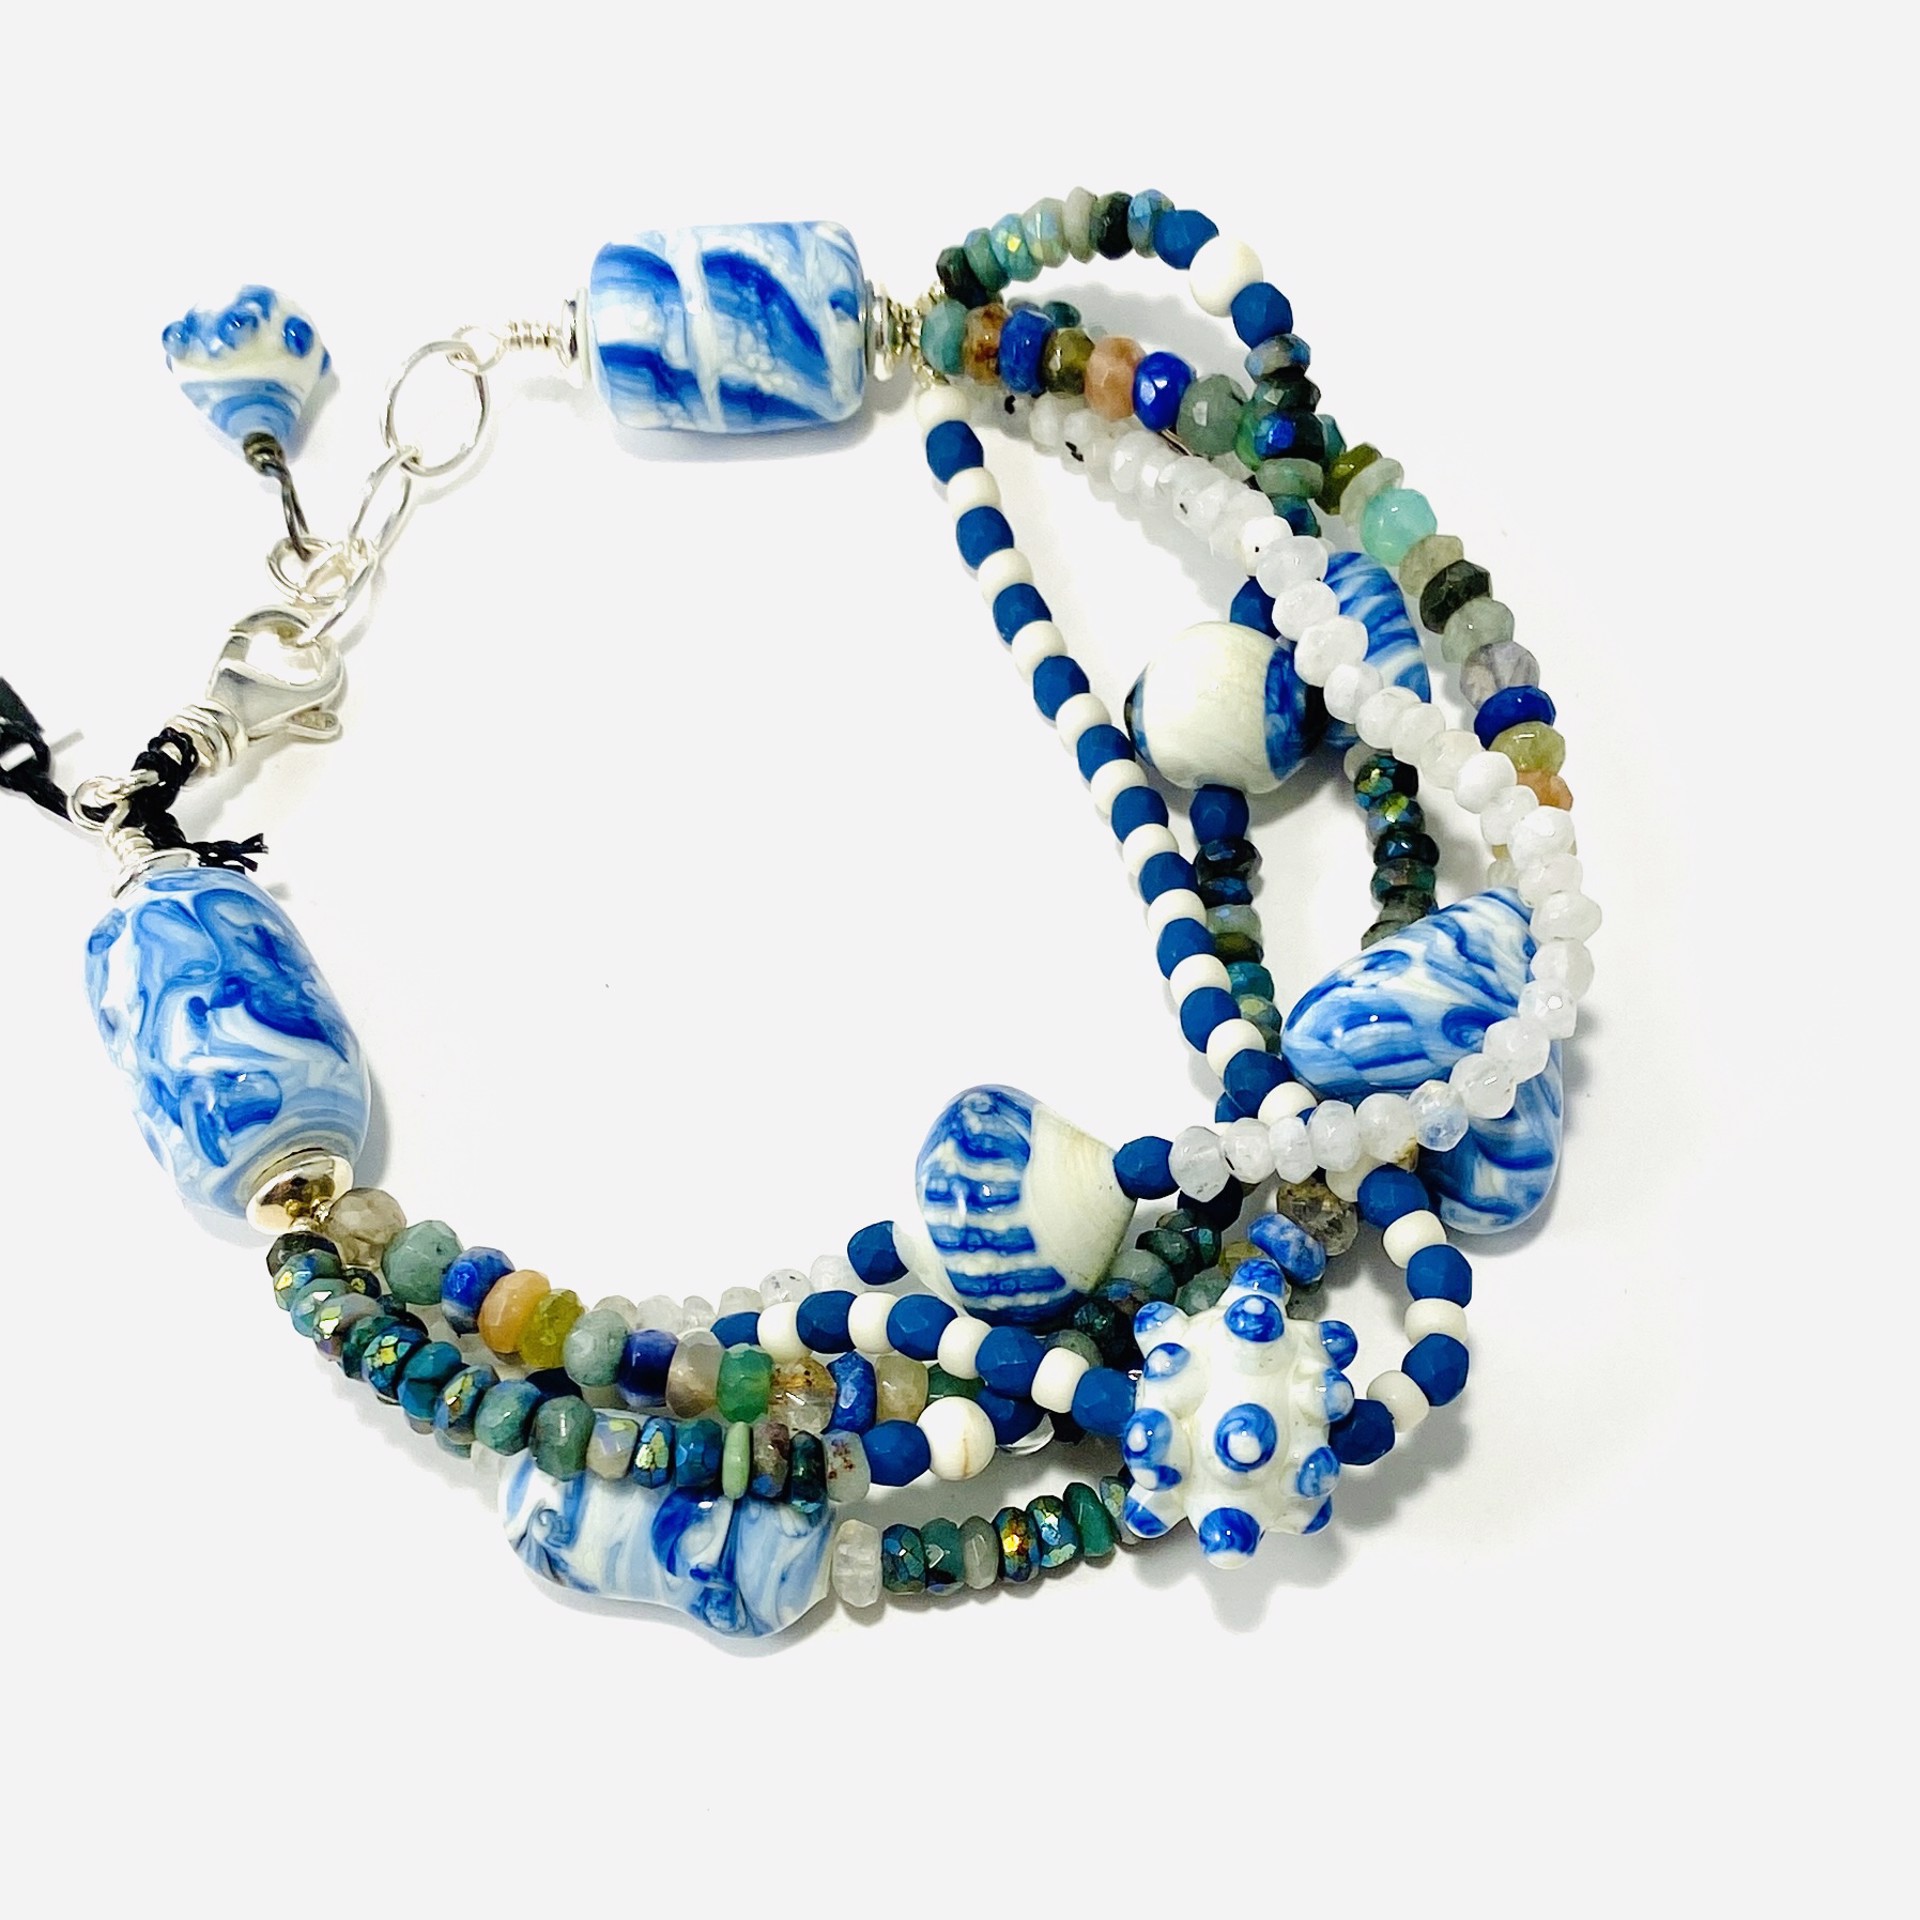 Five Strand Mix Pale Blue and Ivory Glass Beads Gemstone Beads Bracelet LS23-20 by Linda Sacra